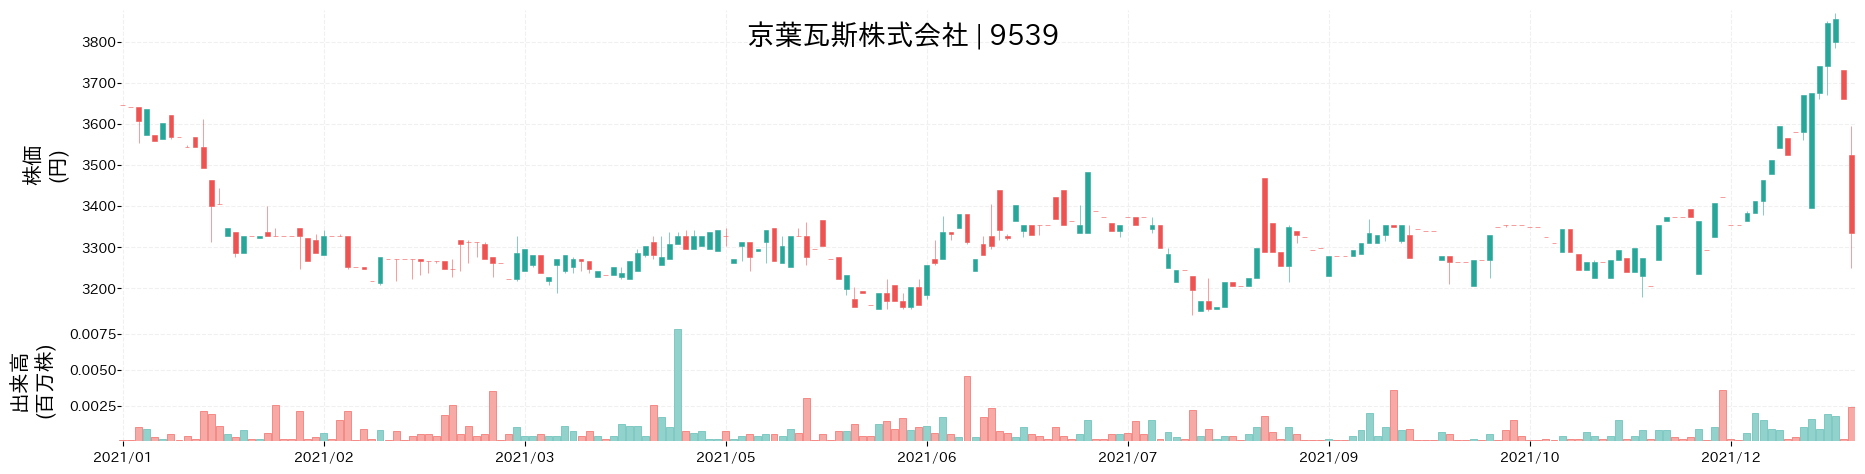 京葉瓦斯の株価推移(2021)